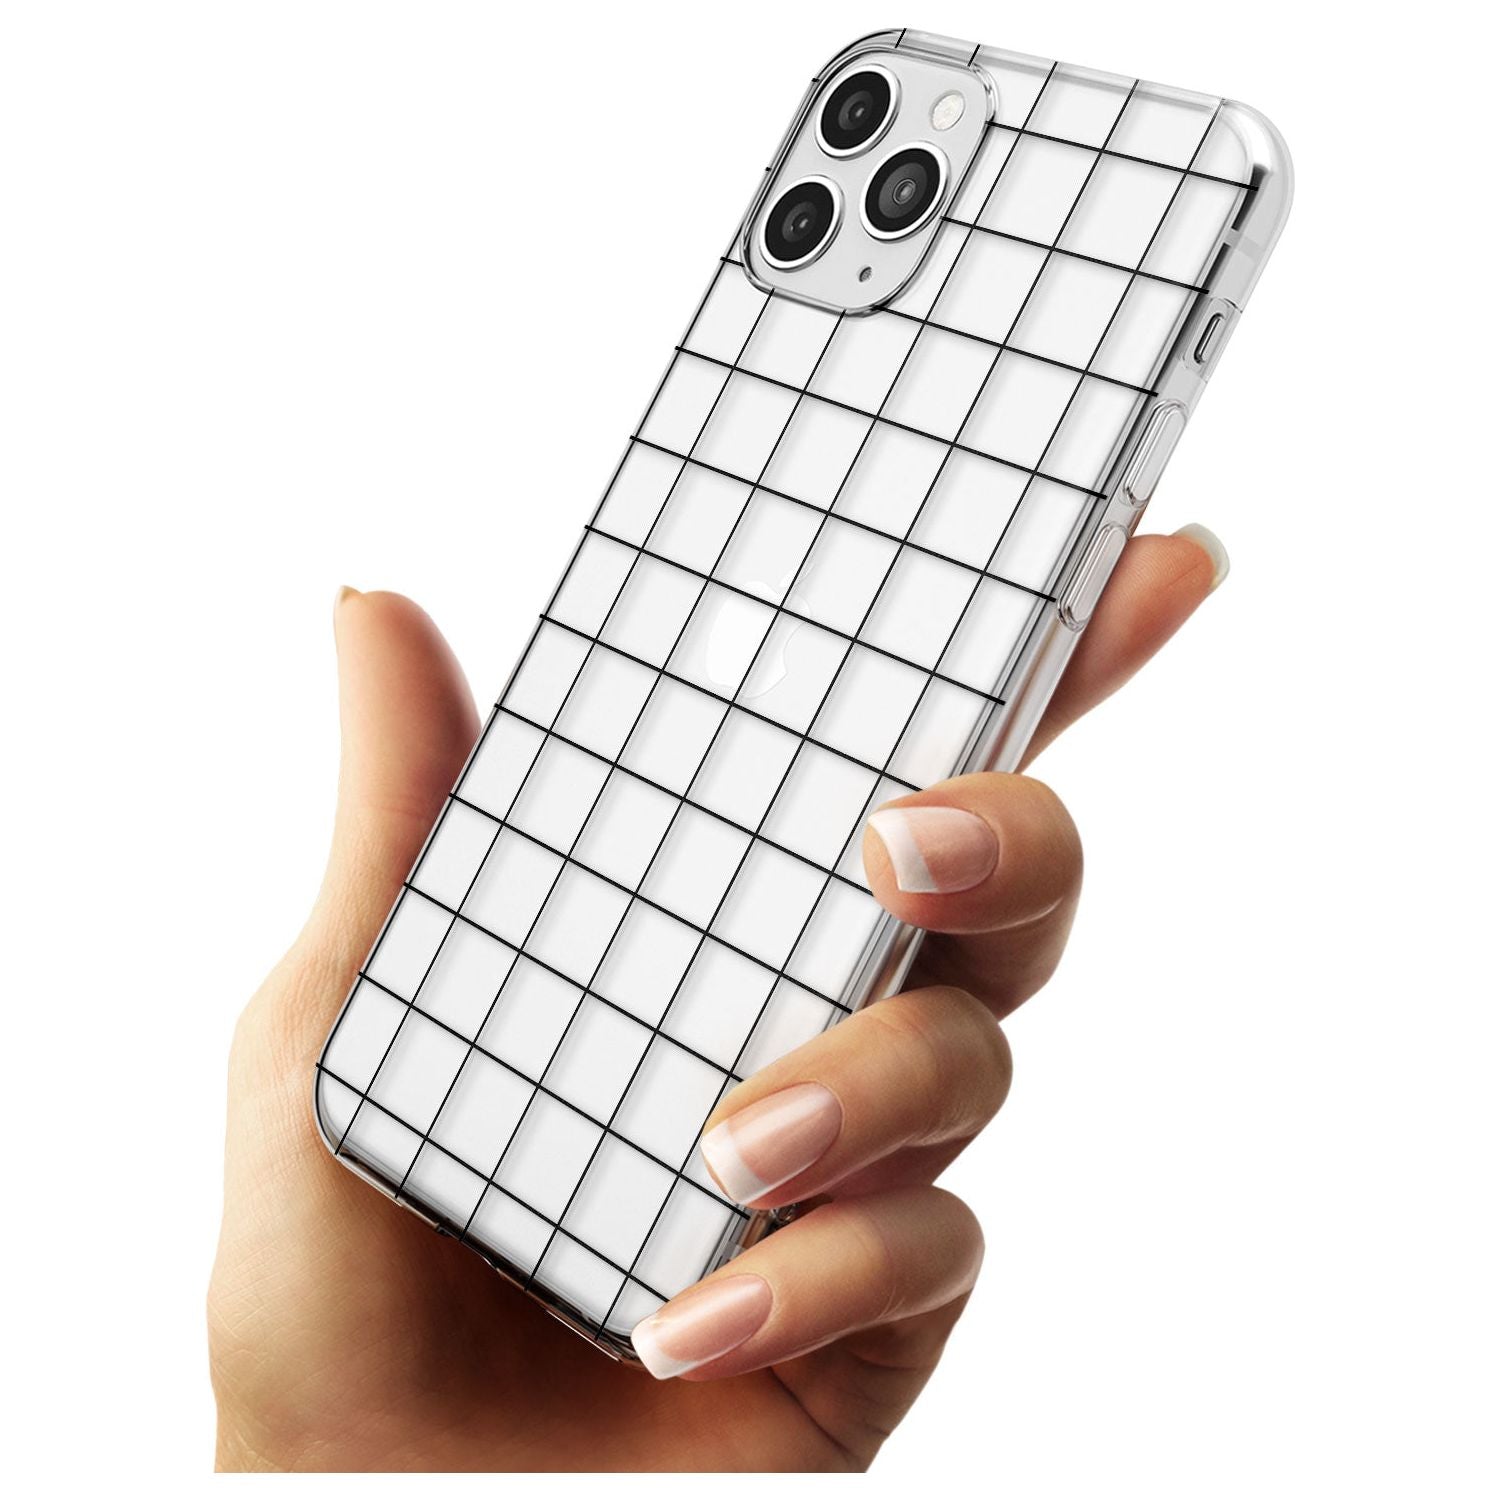 Simplistic Large Grid Pattern Black (Transparent) Slim TPU Phone Case for iPhone 11 Pro Max